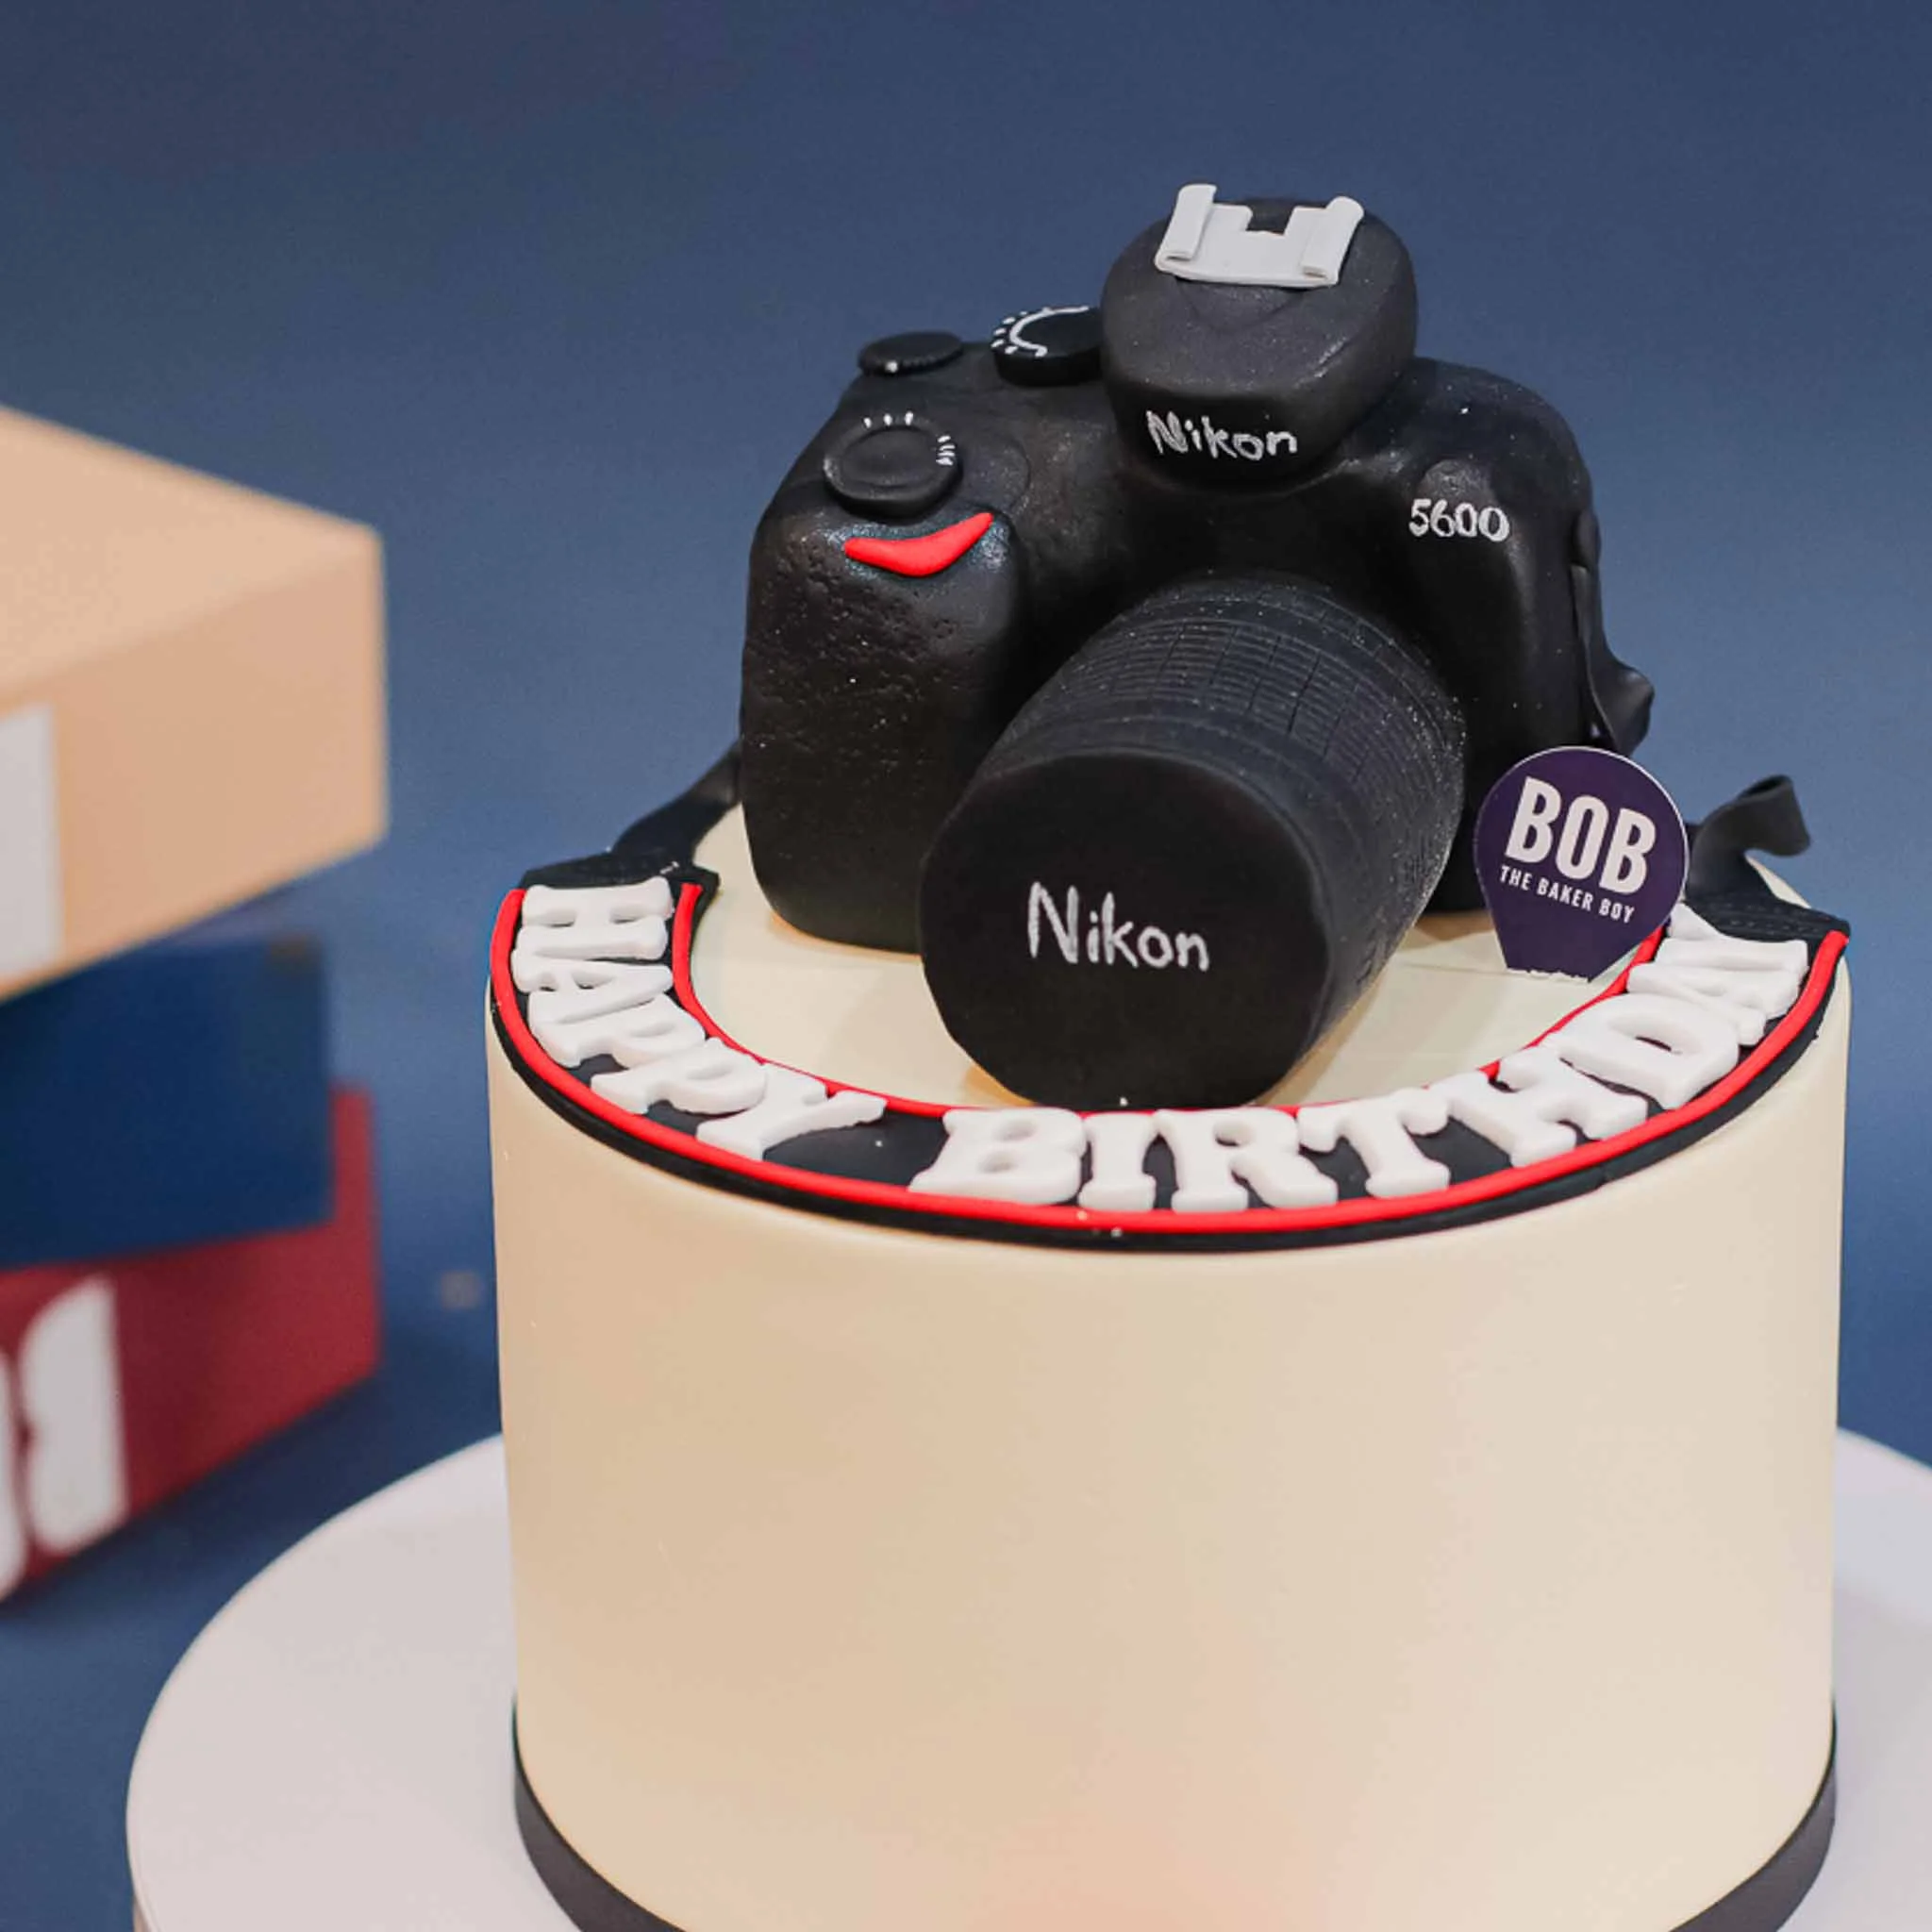 3D DSLR Camera Cake